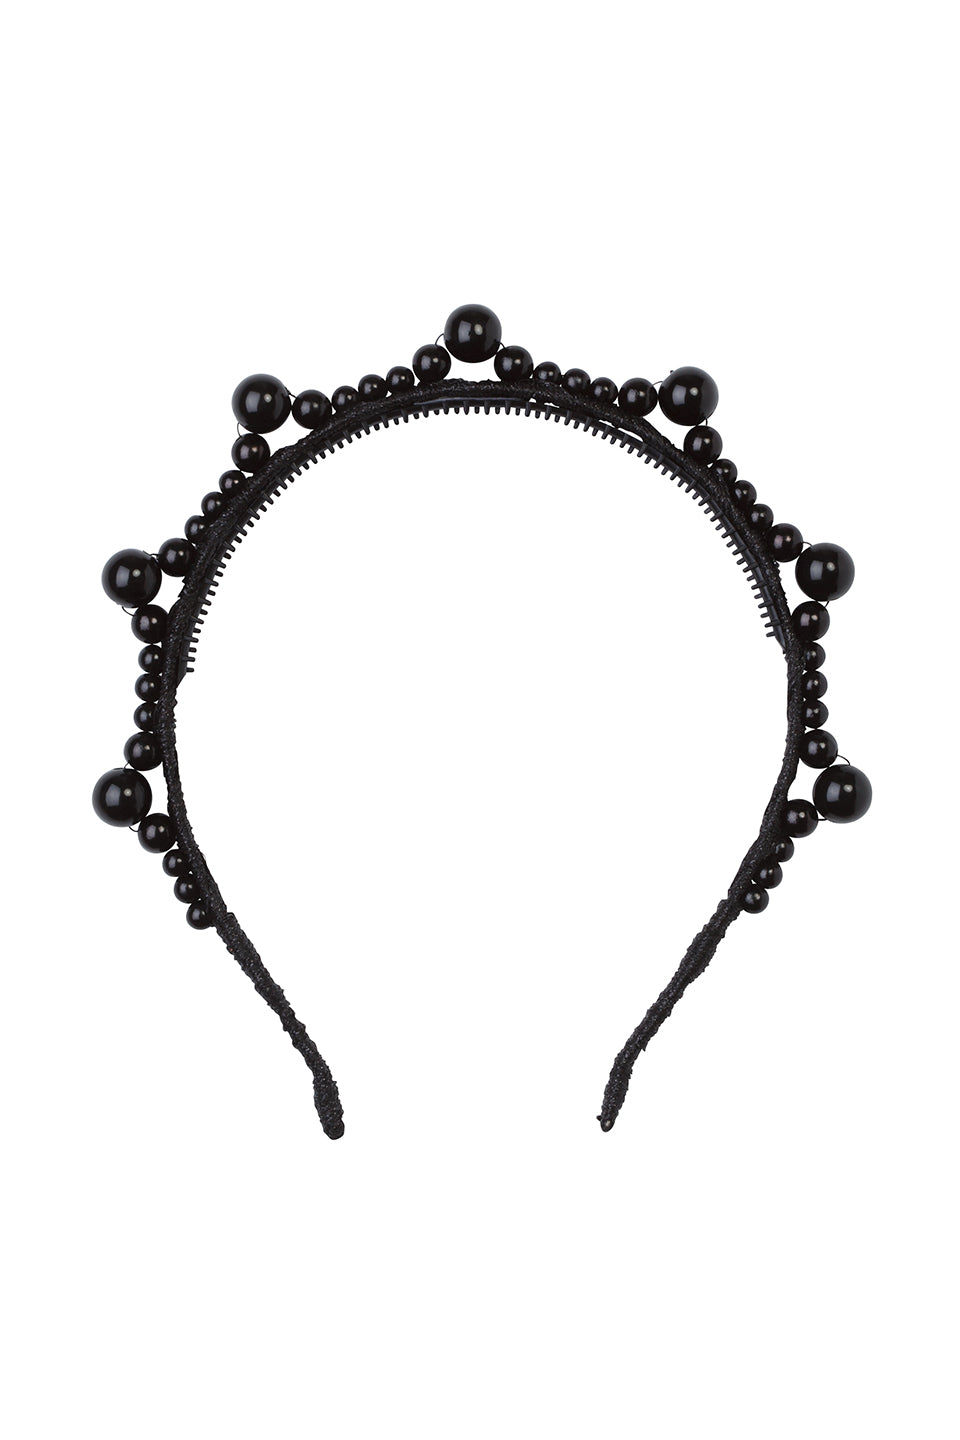 Triple Cluster Pearl Headband - Black/Black Pearls